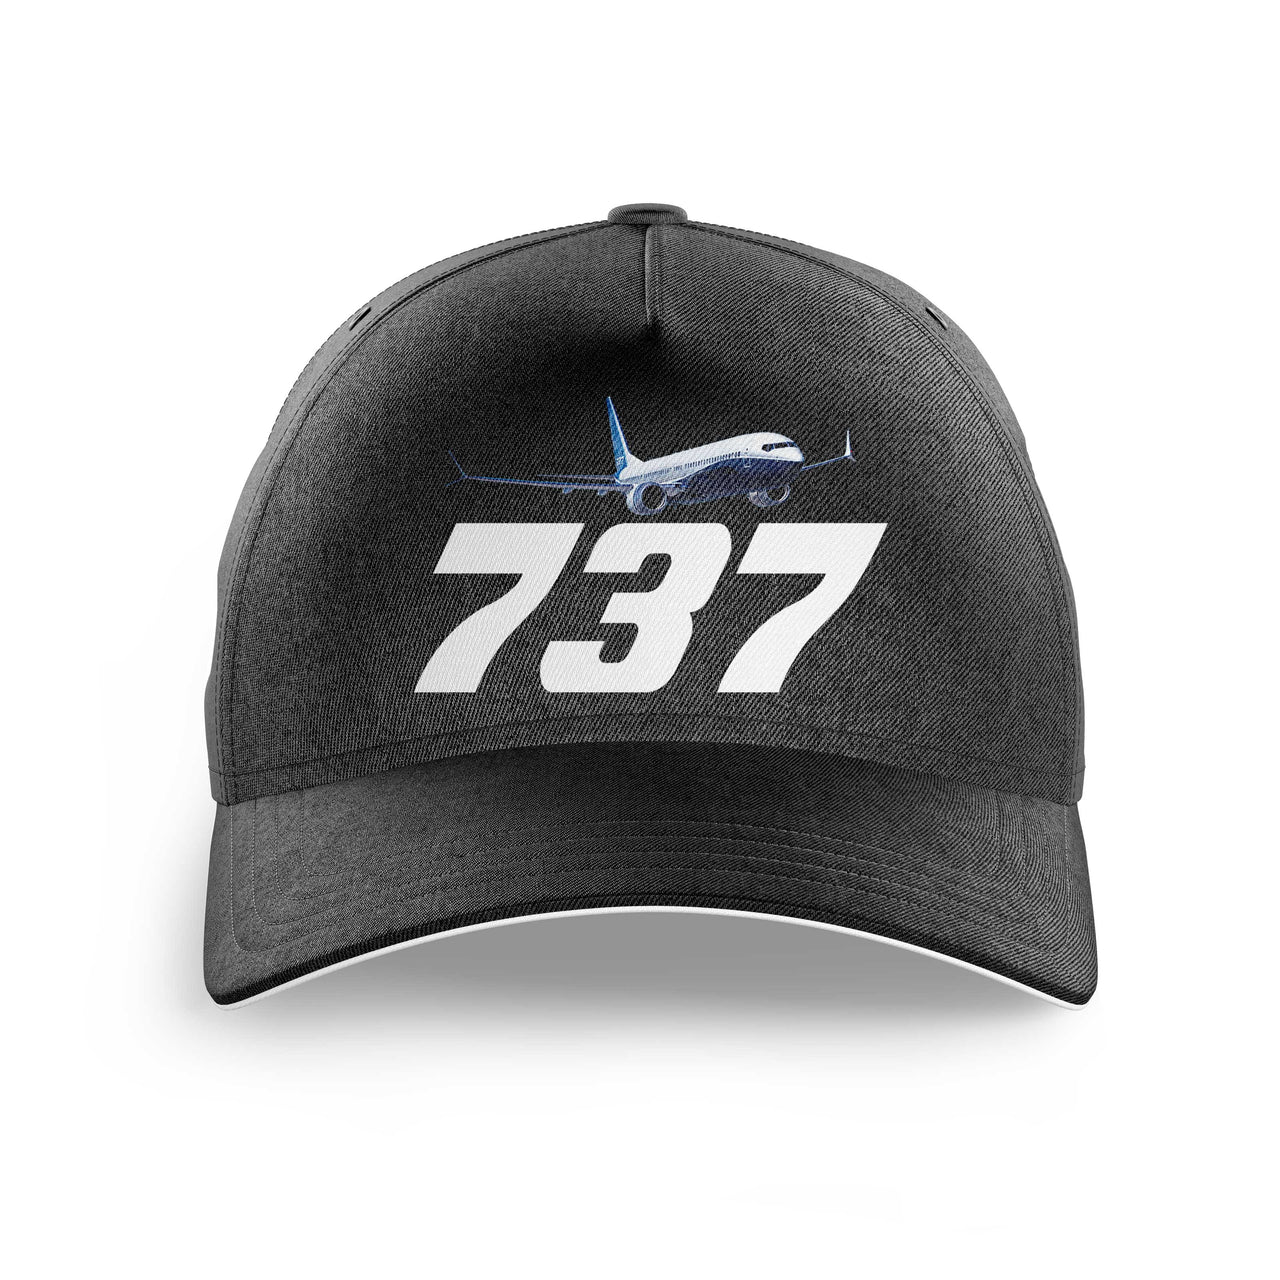 Super Boeing 737-800 Printed Hats